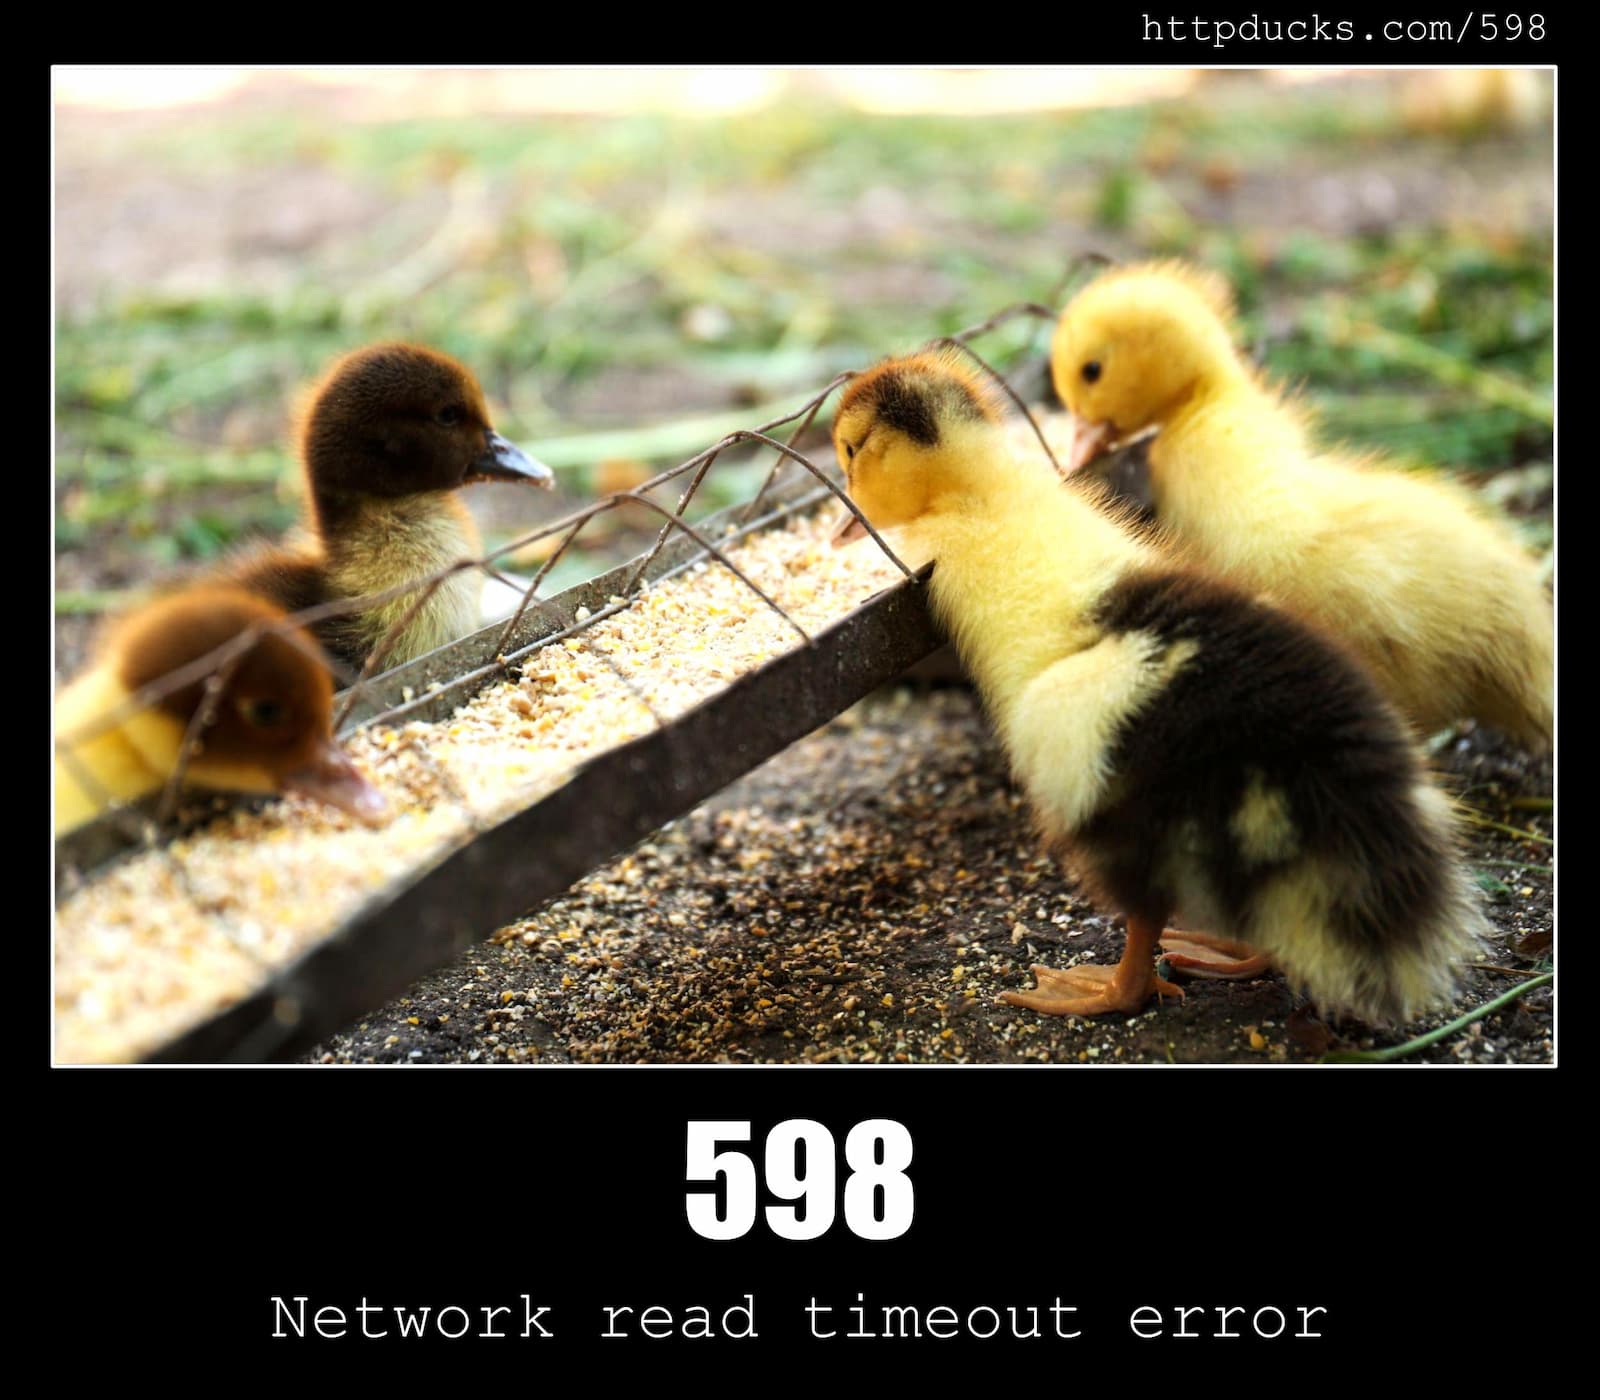 HTTP Status Code 598 Network read timeout error & Ducks